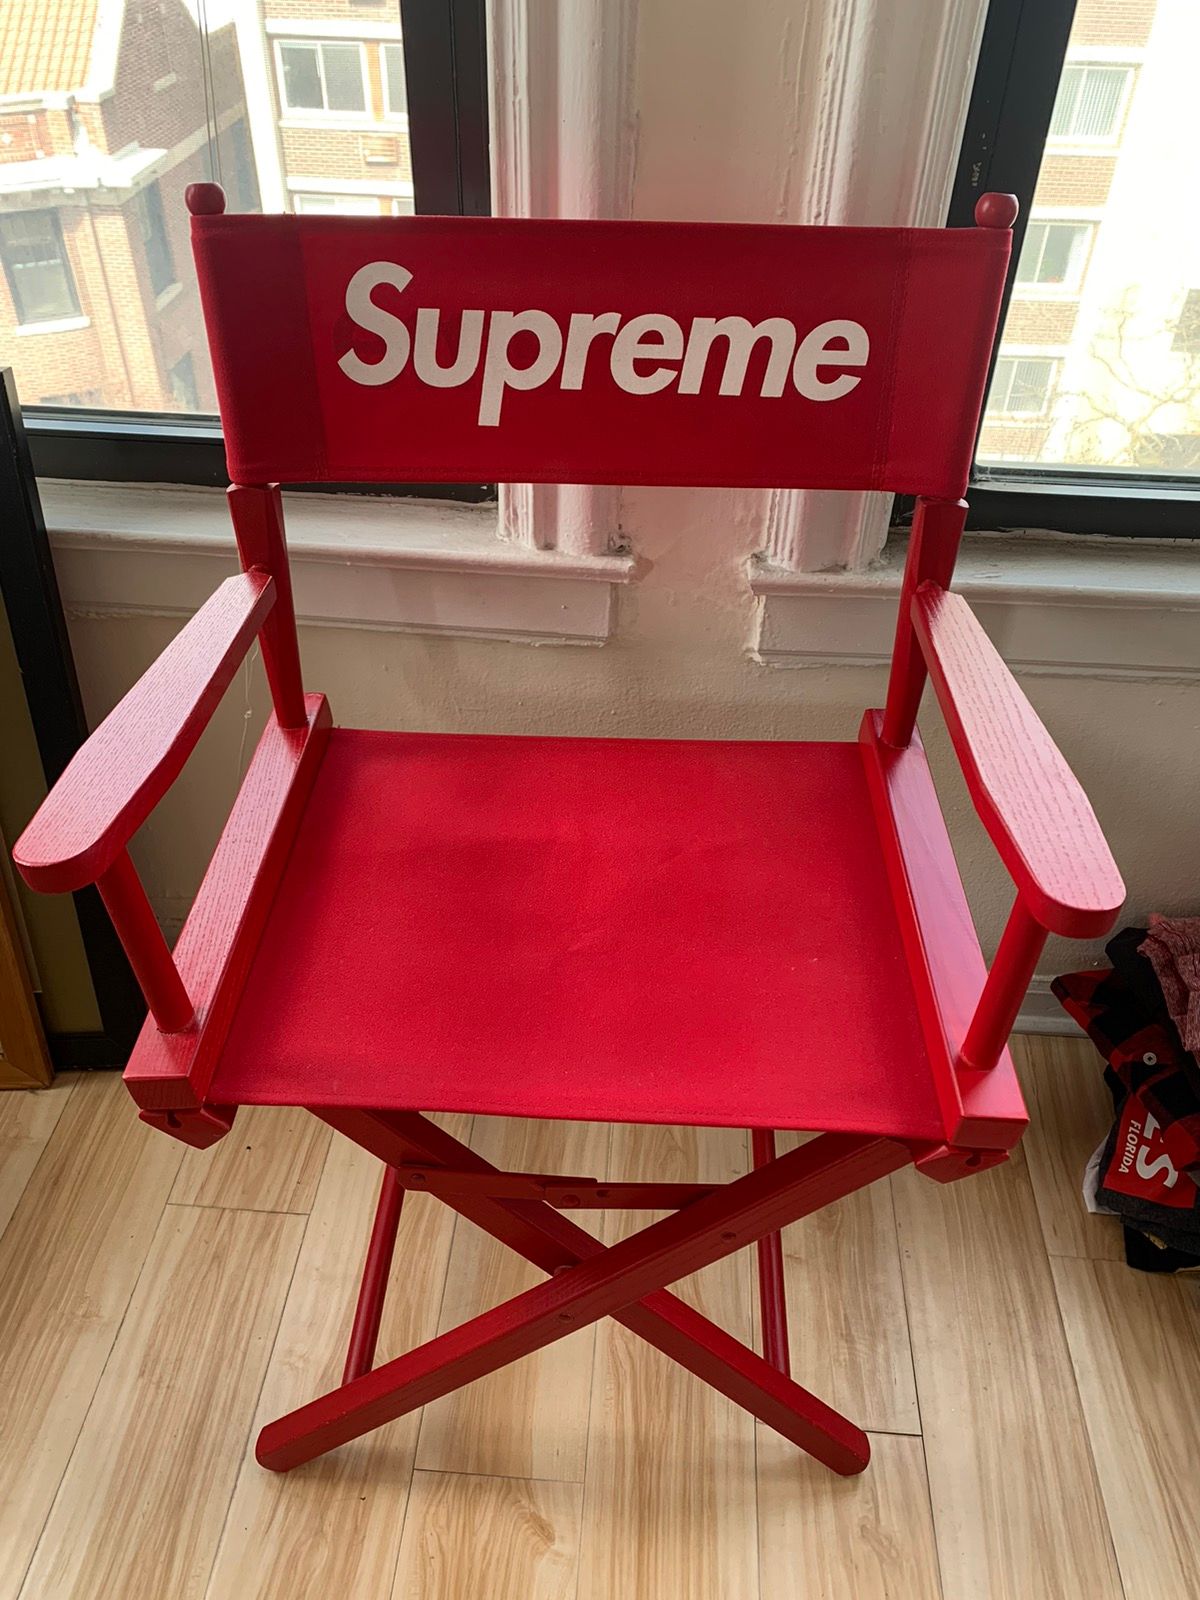 Supreme Supreme Director's Chair Red | Grailed